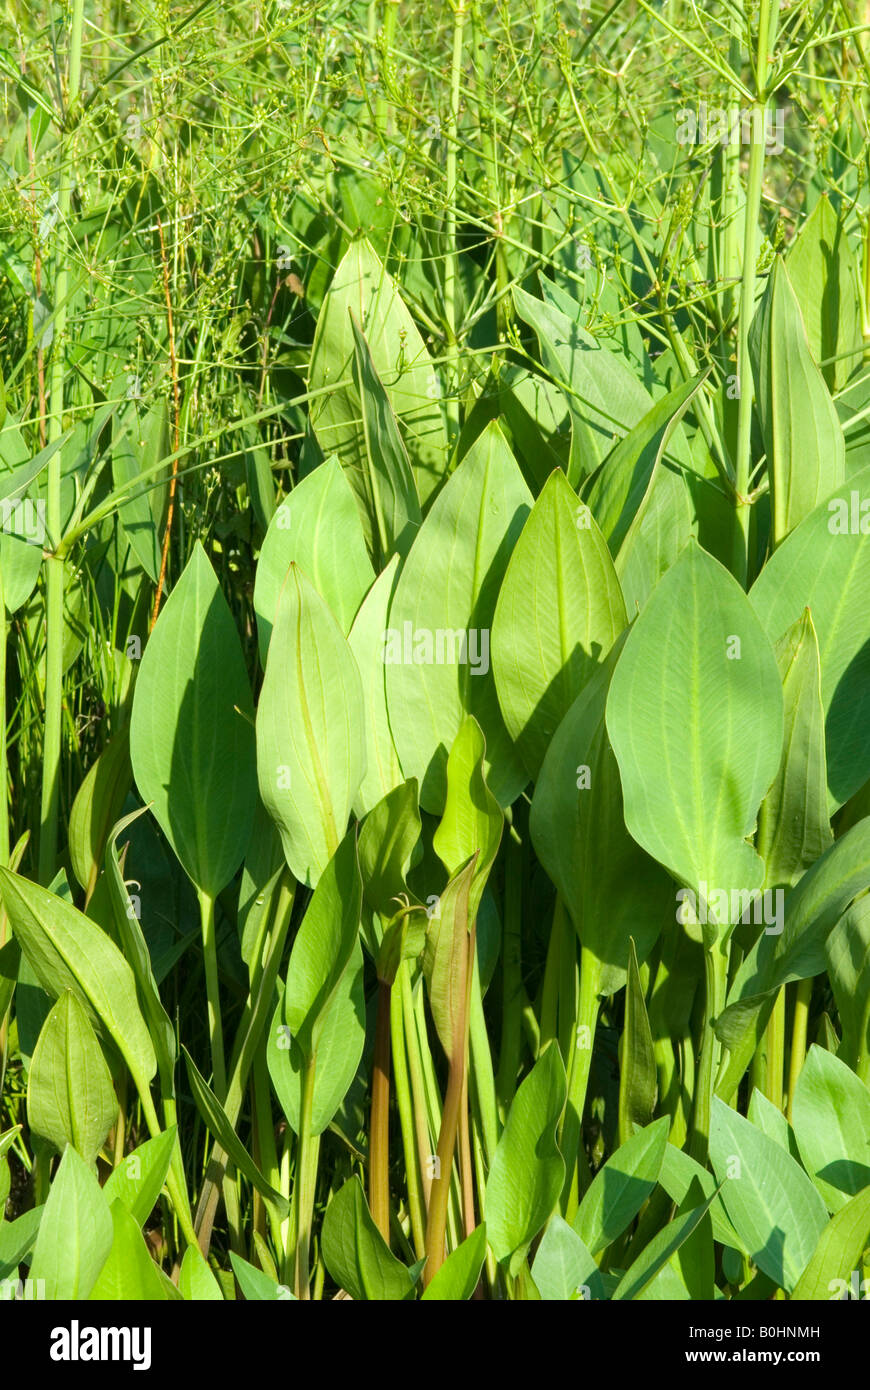 Common Water-plantain or Mad-dog Weed (Alisma plantago-aquatica), BEG Biotope near Rotholz, Tyrol, Austria, Europe Stock Photo